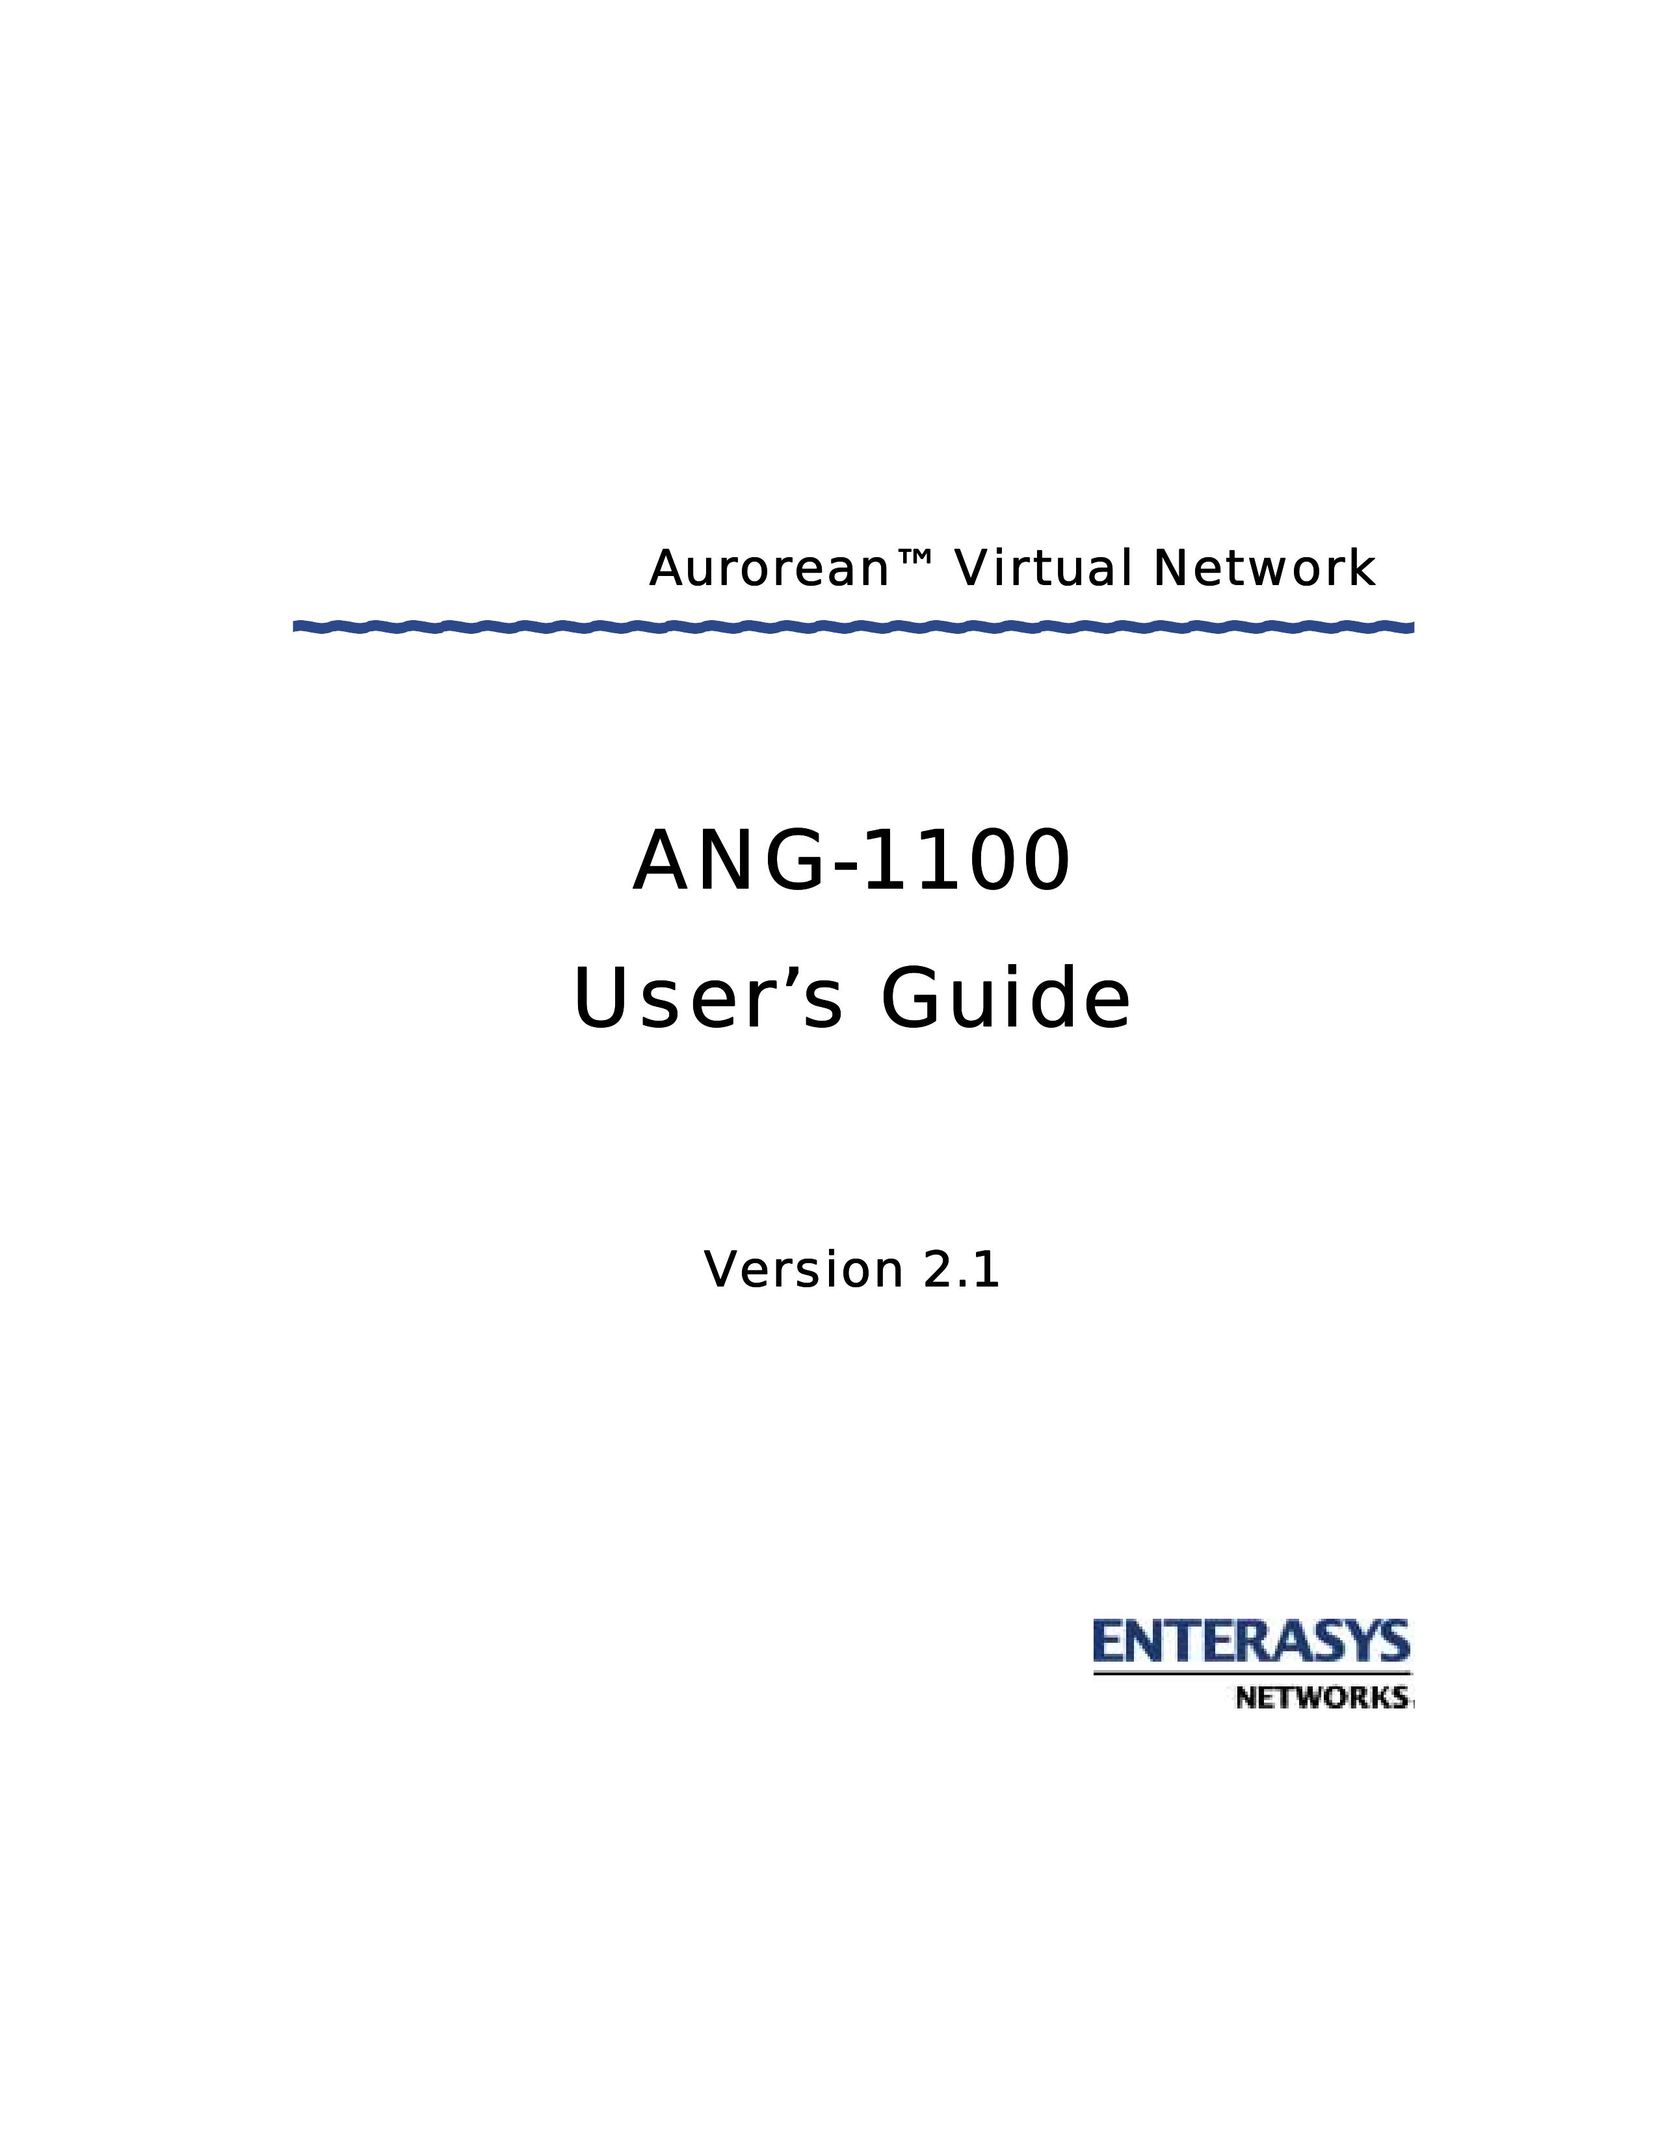 Enterasys Networks ANG-1100 Network Card User Manual